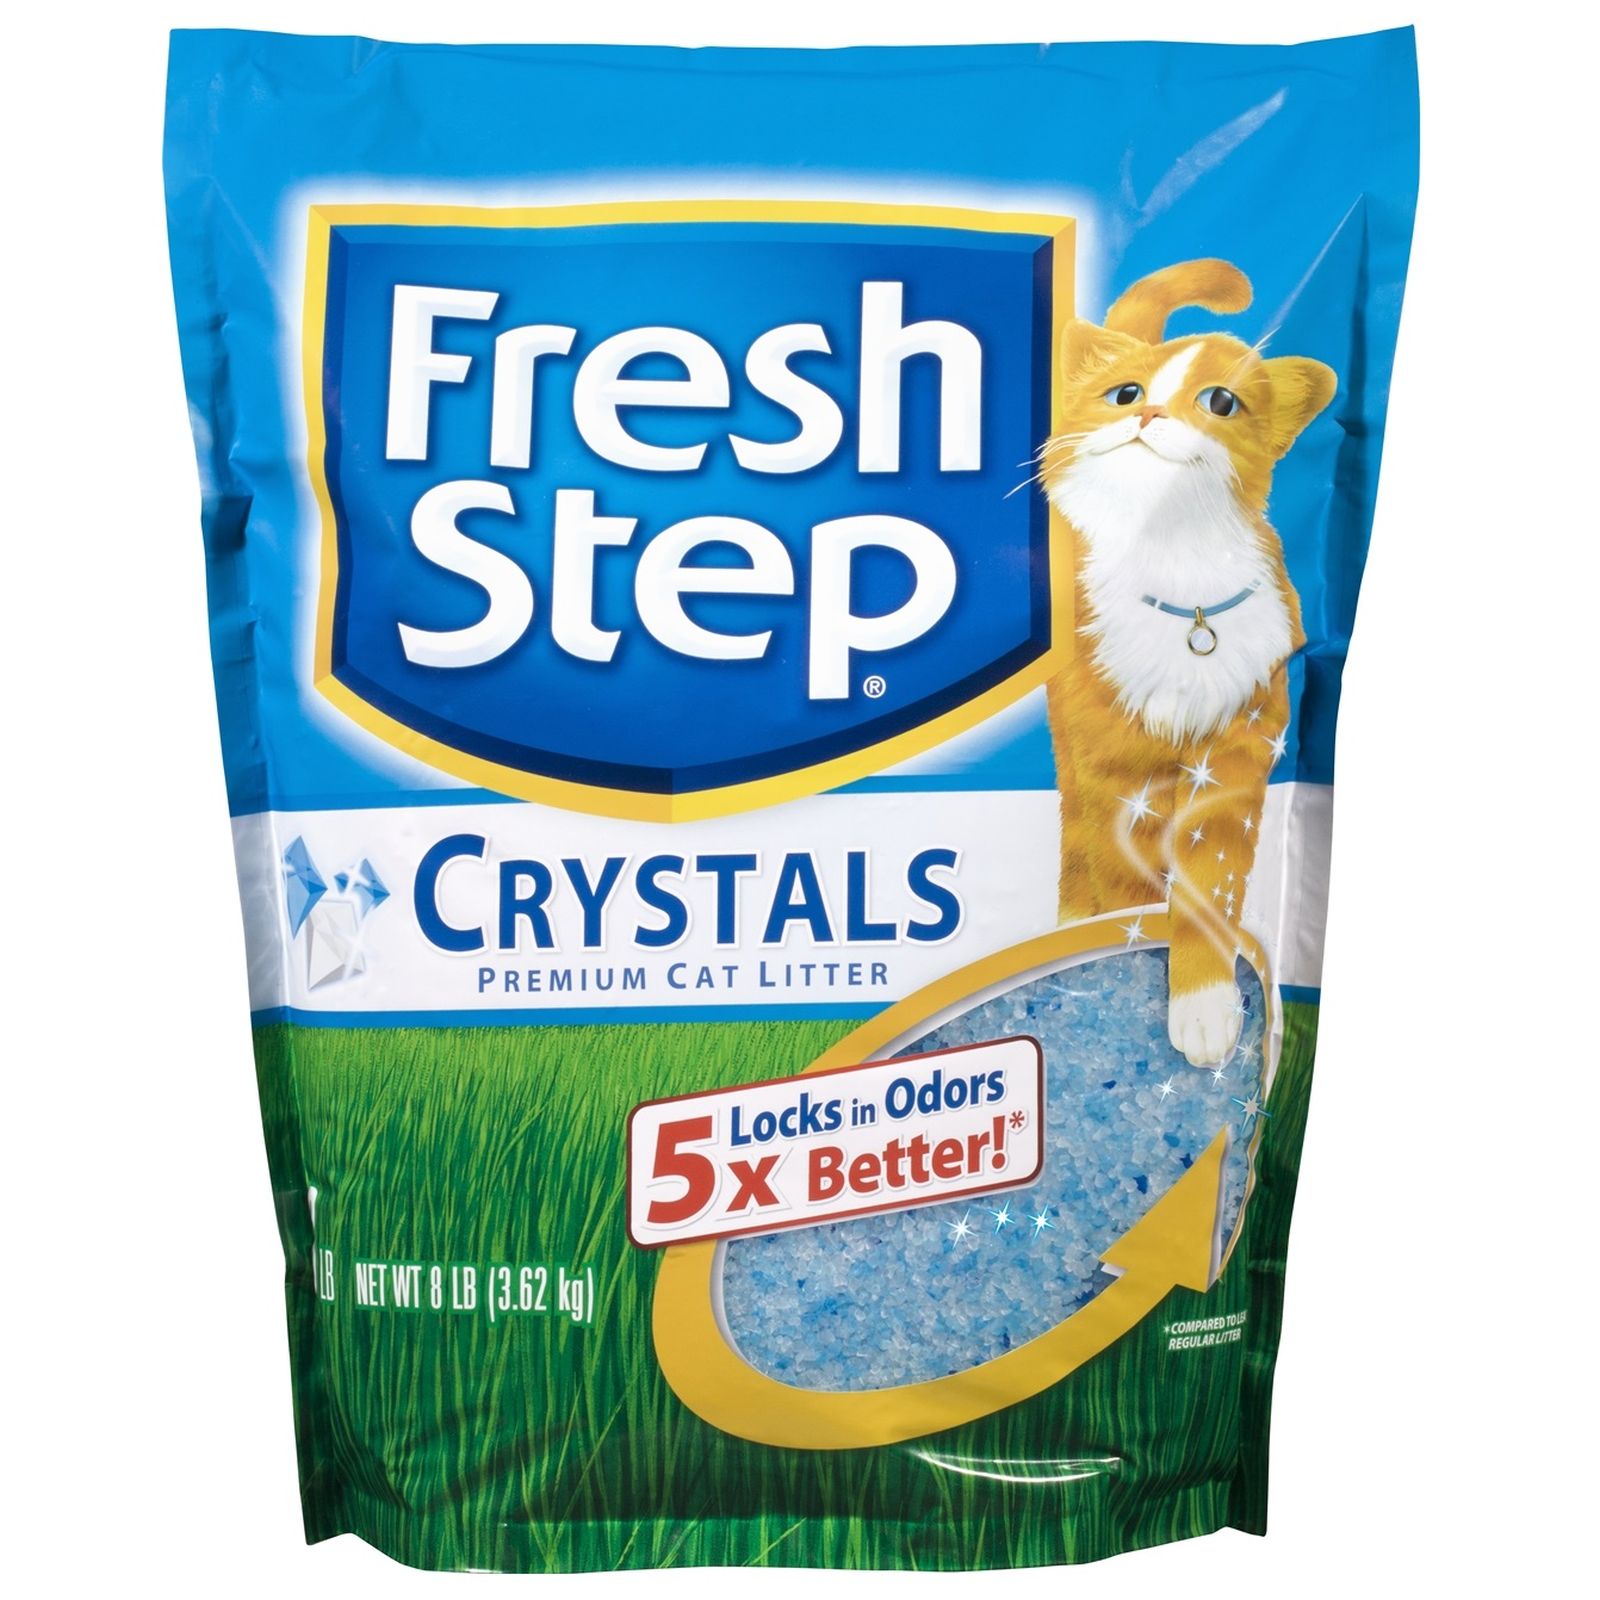 Fresh Step Premium Crystal Cat Litter Value Size, 8 lbs (3.62 kg)